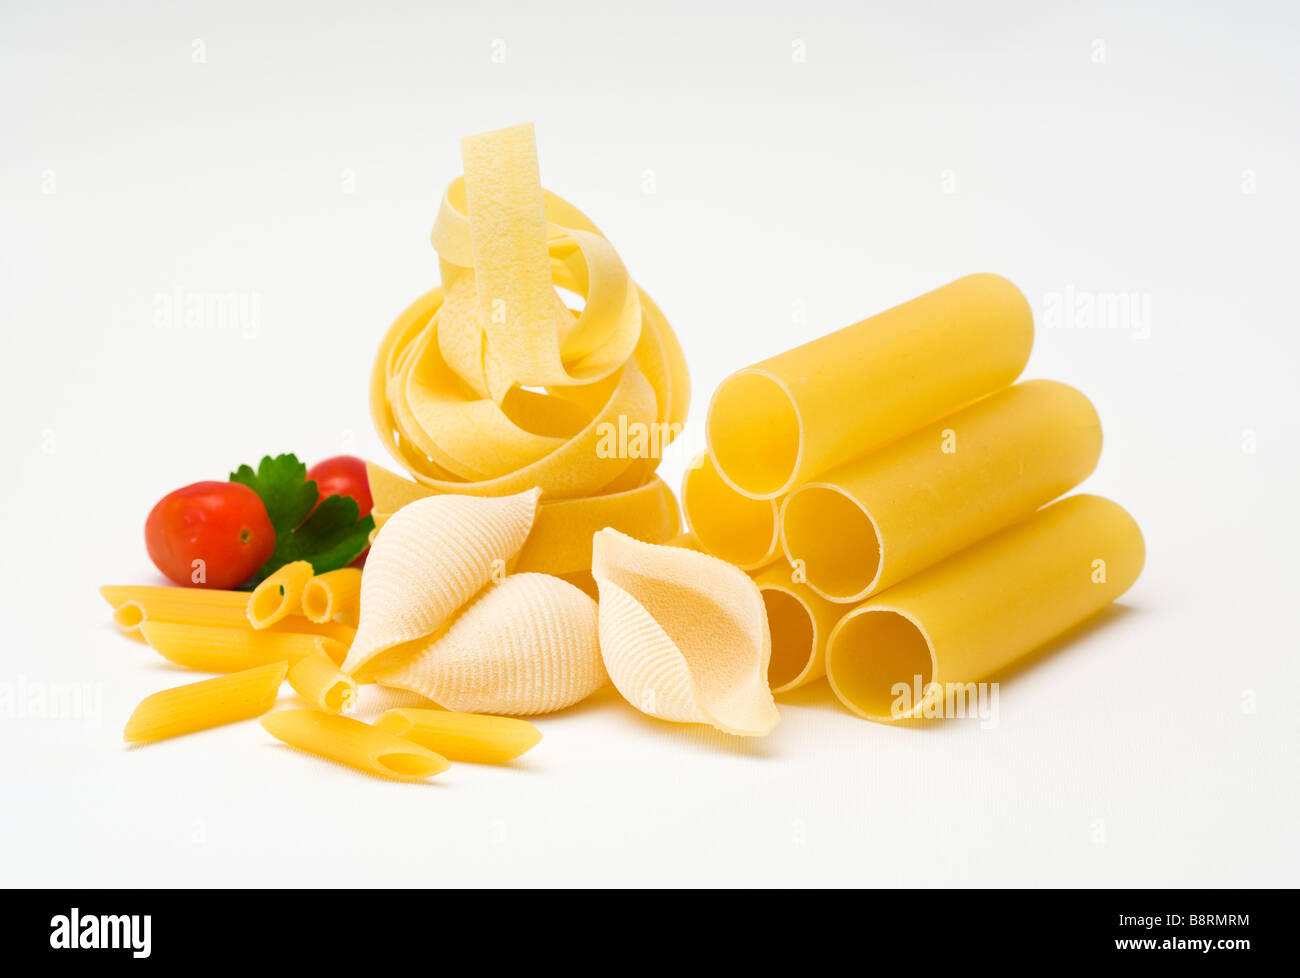 collection of raw pasta, tomato garnish, white textile surface Stock Photo